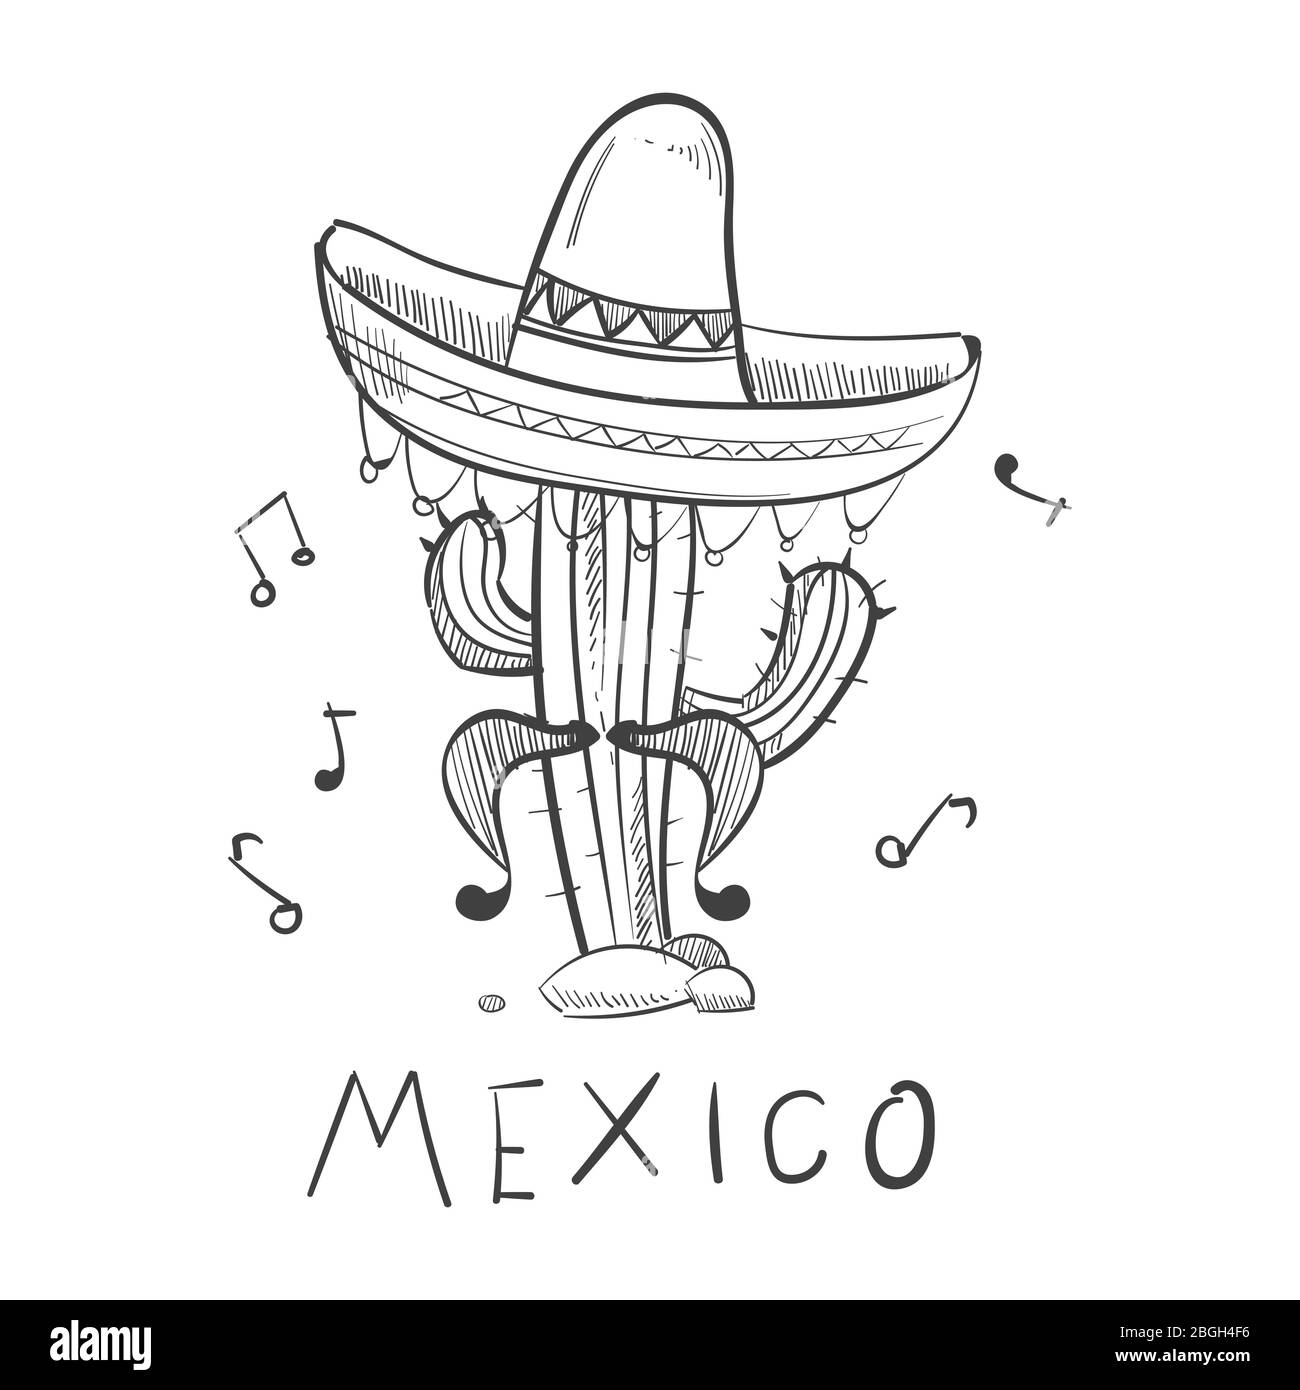 Mexiko Skizze Kaktus in Sombrero - Hand gezeichnete mexikanische Symbole drucken. Vektorgrafik Stock Vektor